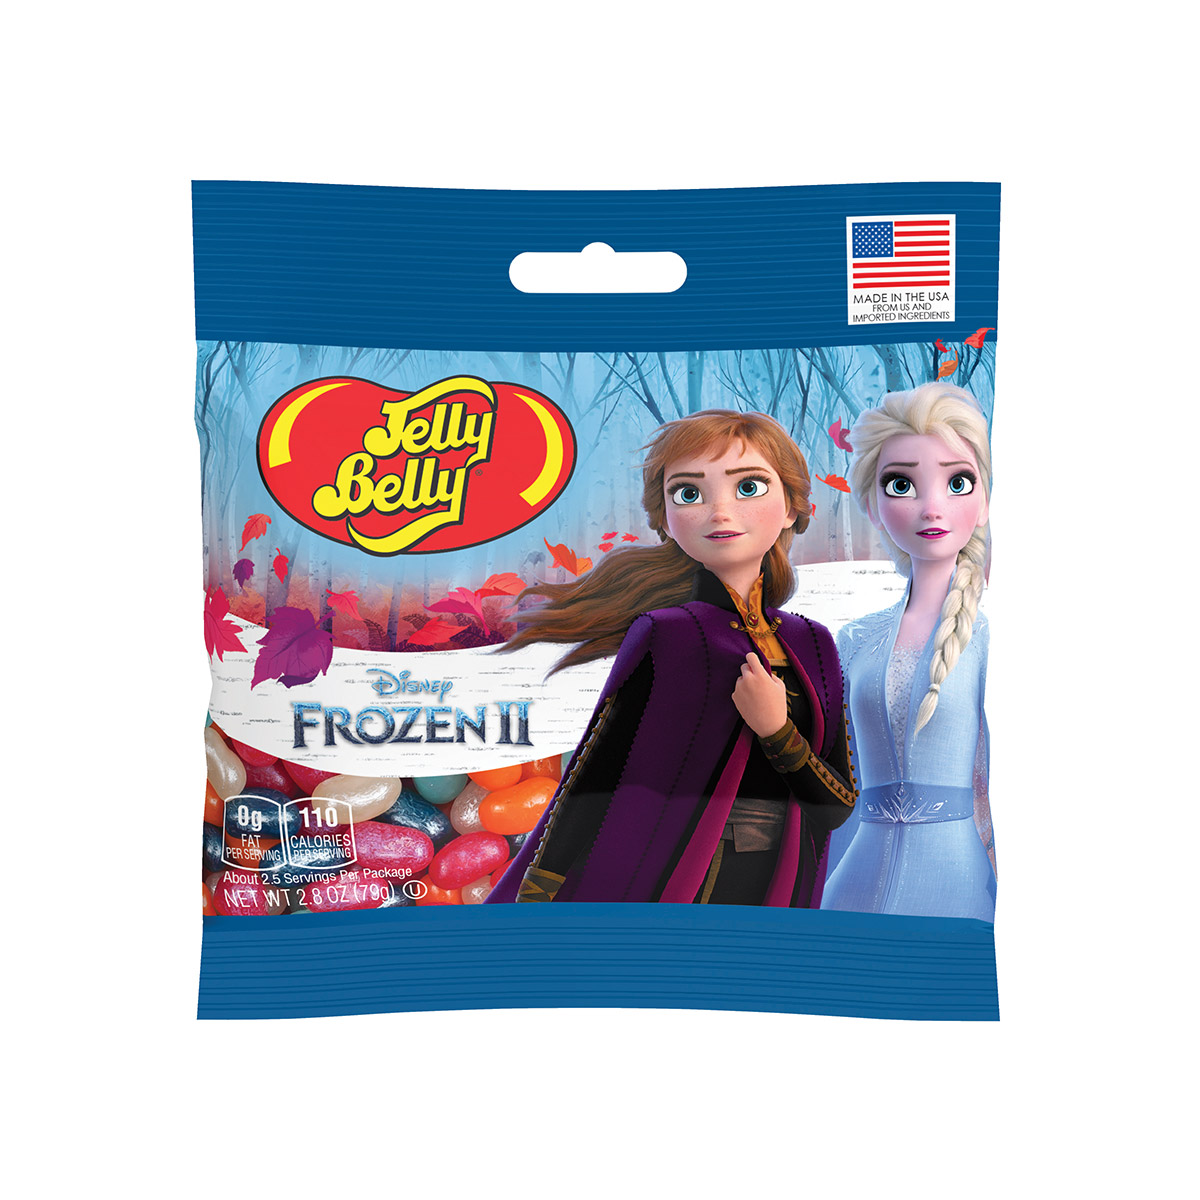 Disney Frozen Elsa Anna Olaf Kids Childrens Girls Purple Bean Bag// Refill// Cover